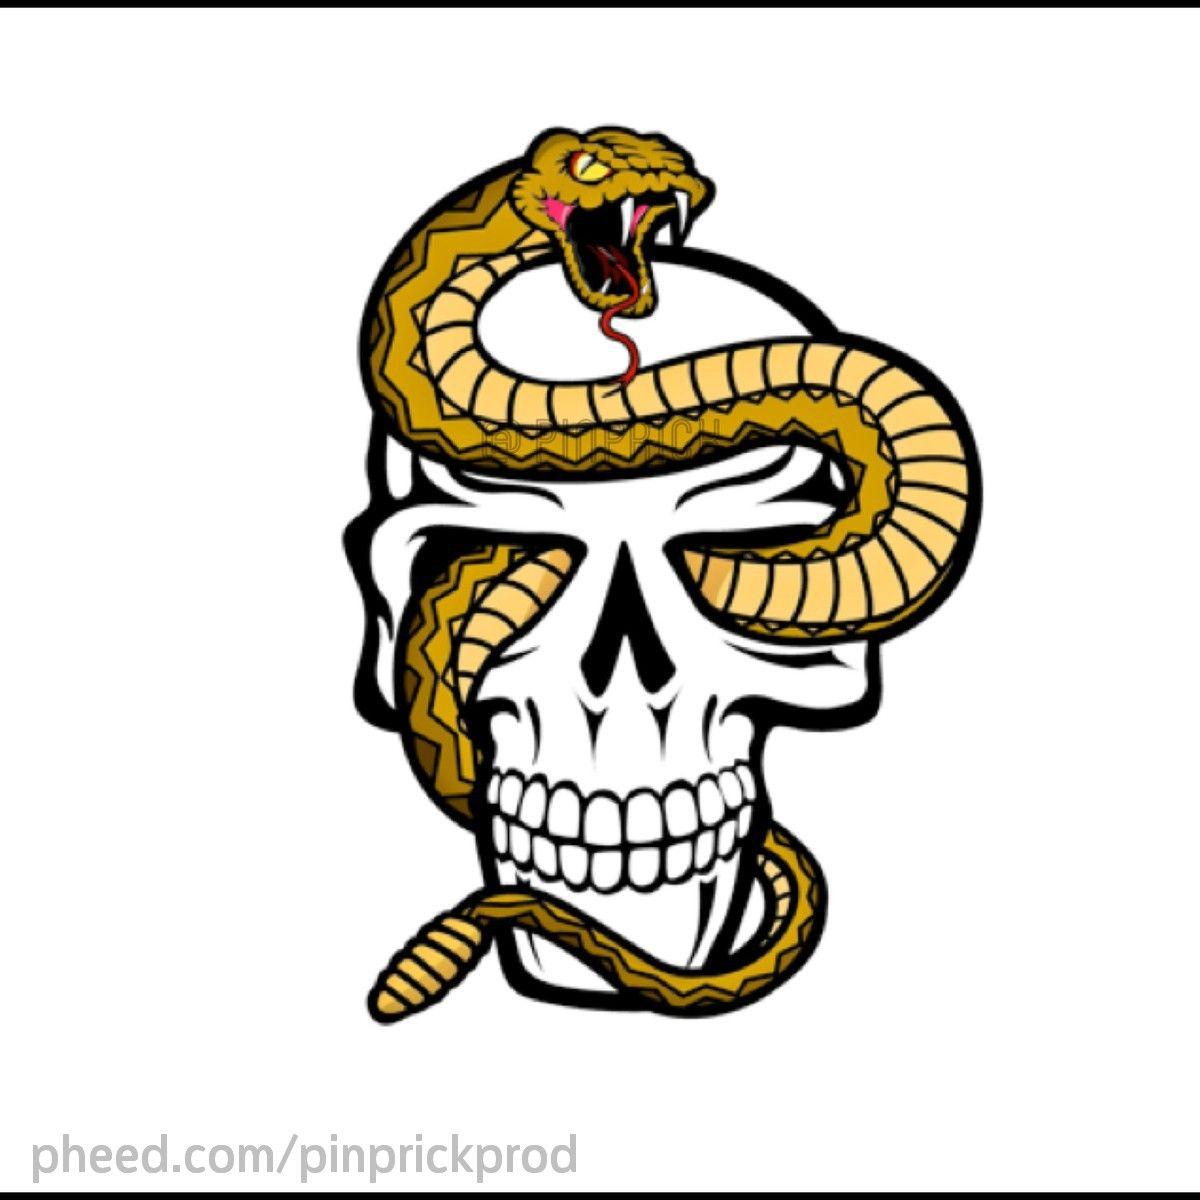 Viper Snake Logo - Free Viper Head Drawing, Download Free Clip Art, Free Clip Art on ...